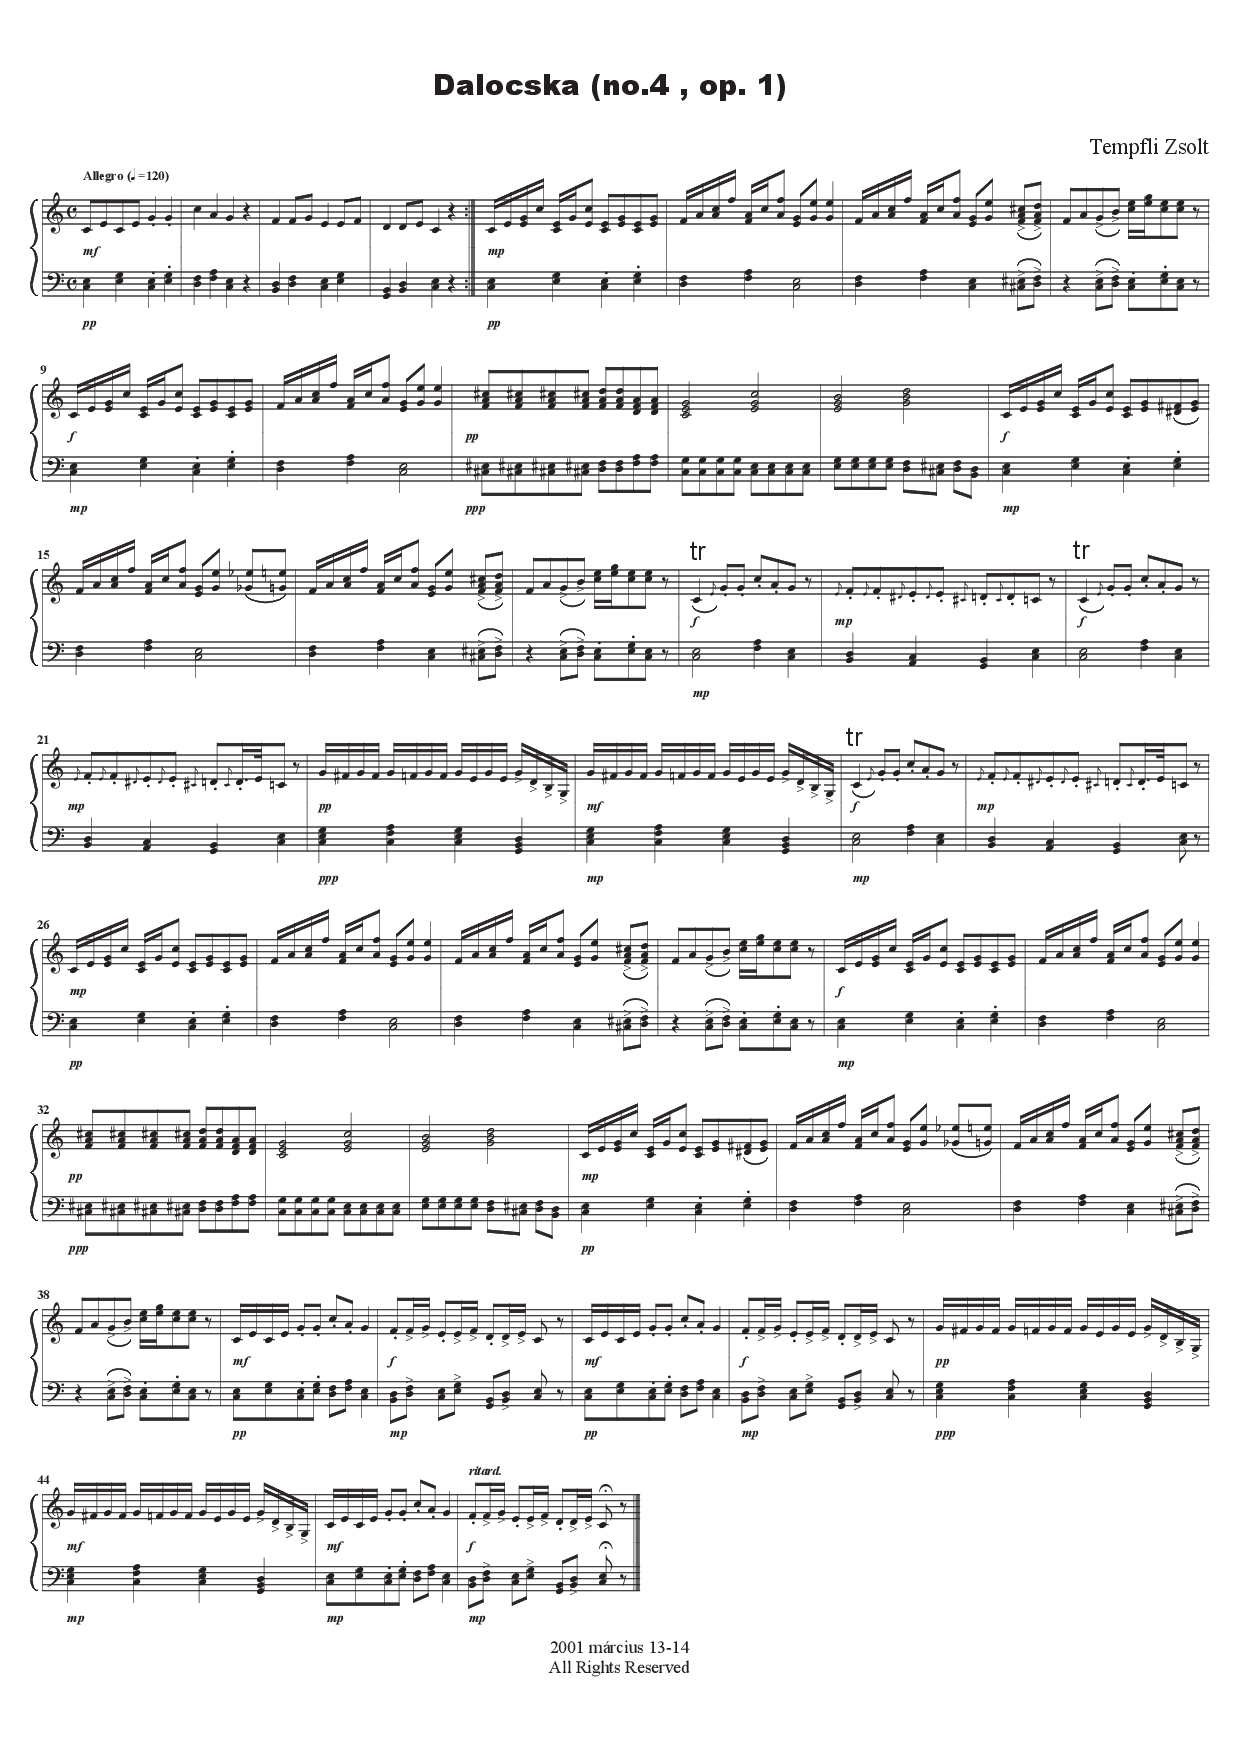 Zsolt Tempfli: Cântec nr. 4 (op. 1 no. 4) pentru pian